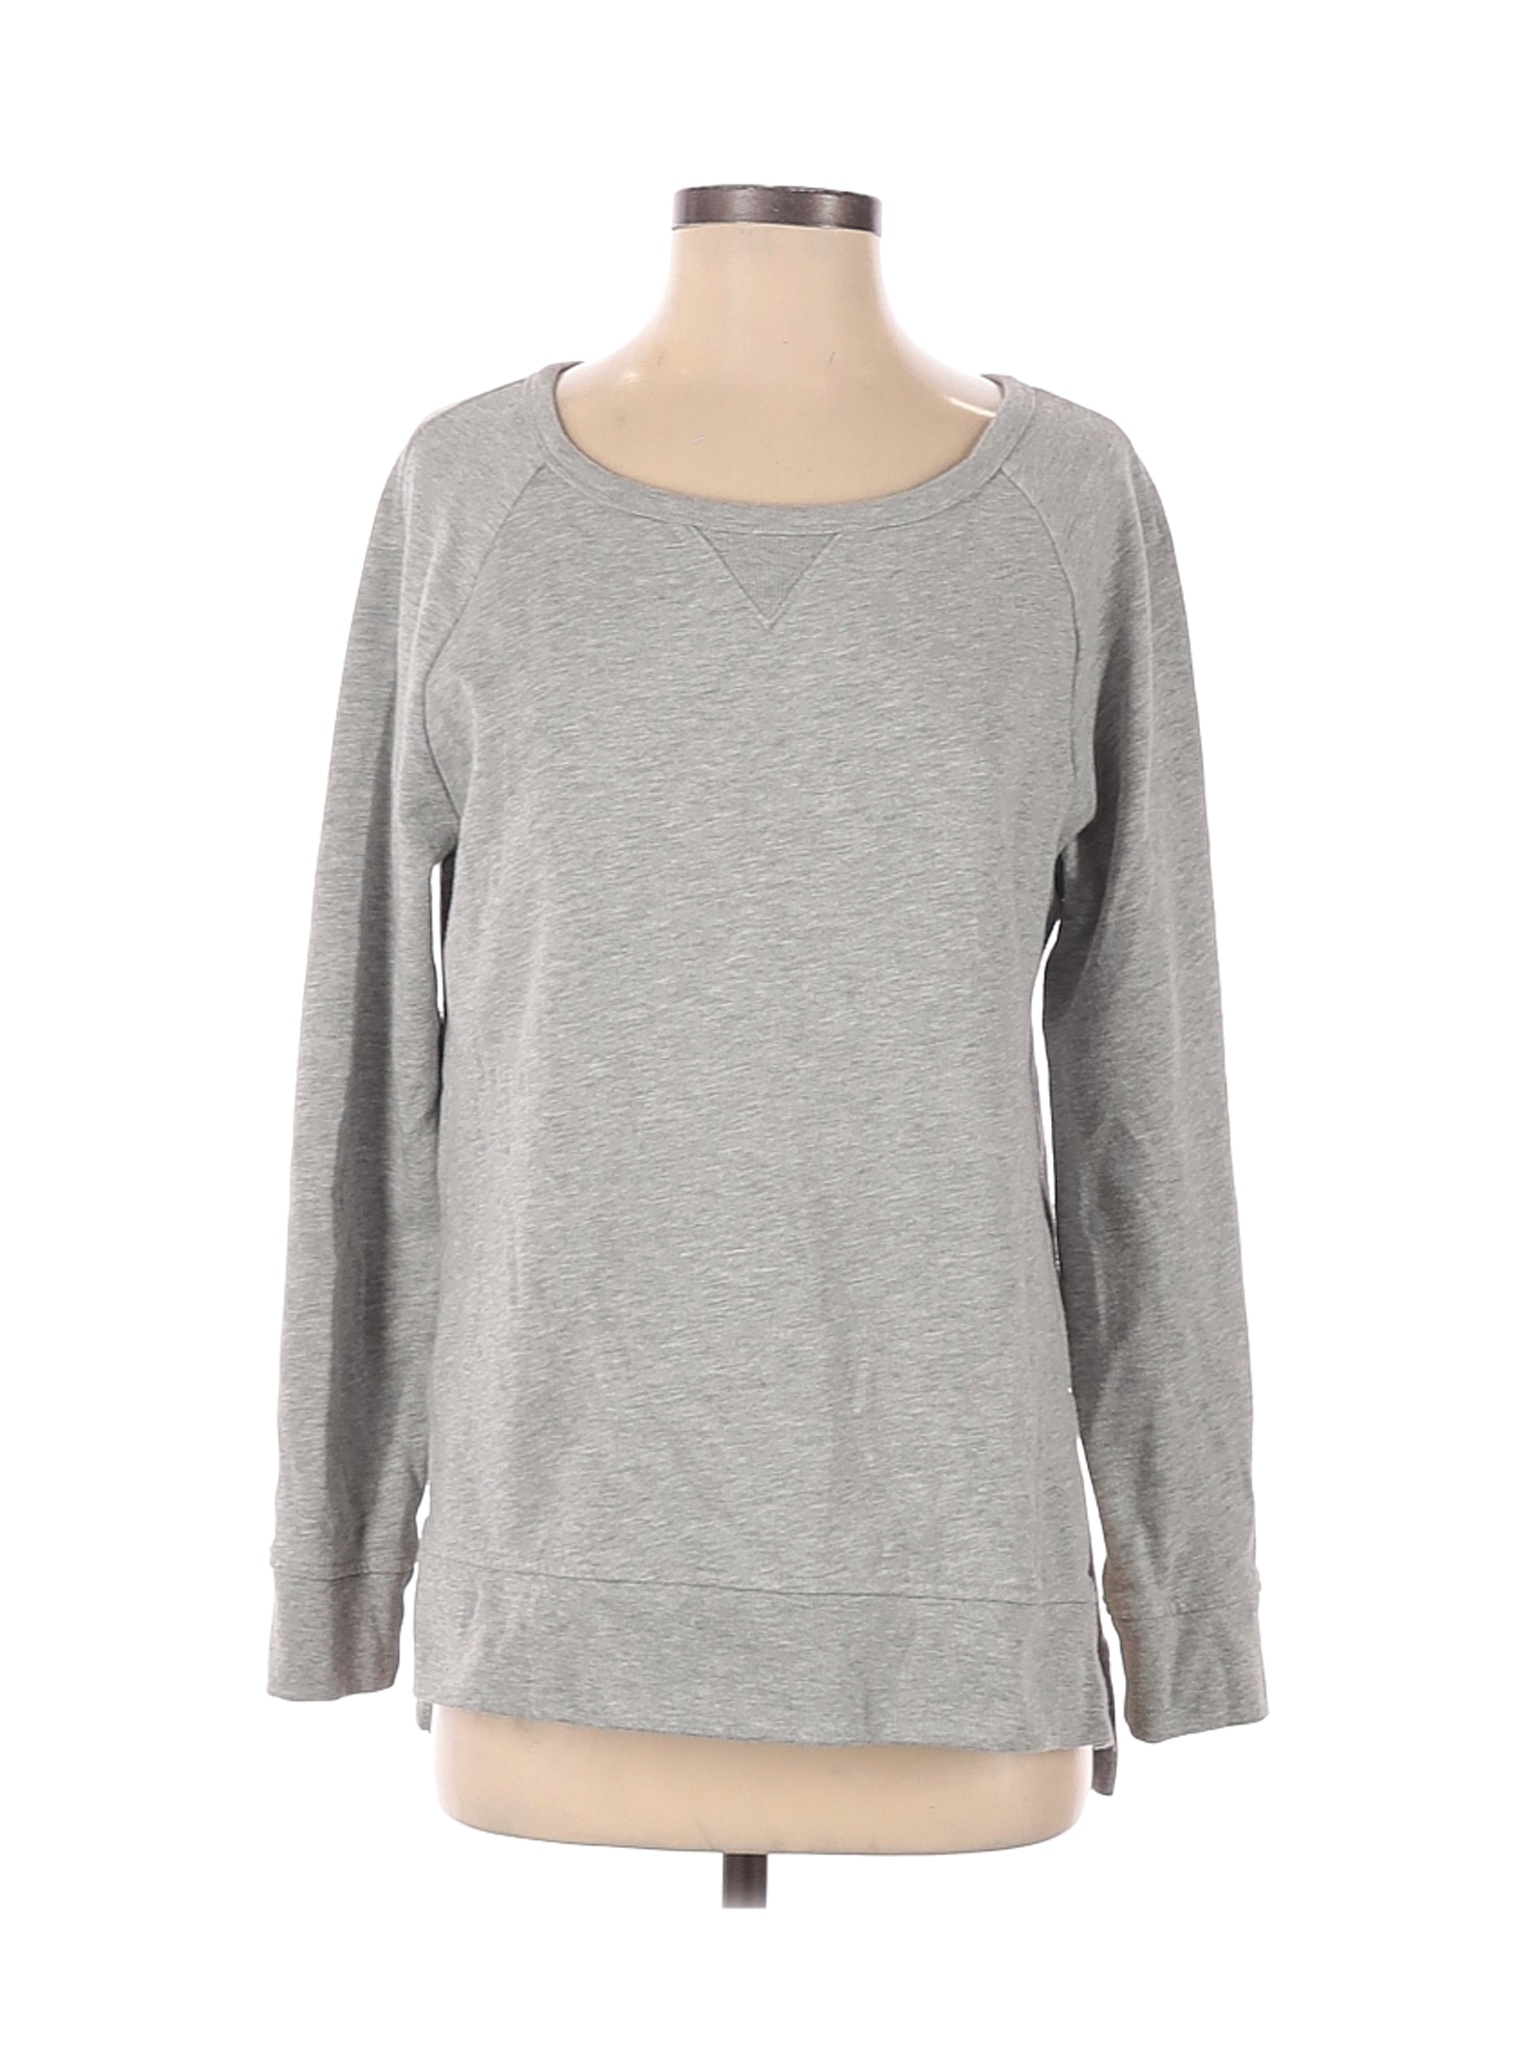 Gap Women Gray Sweatshirt S | eBay